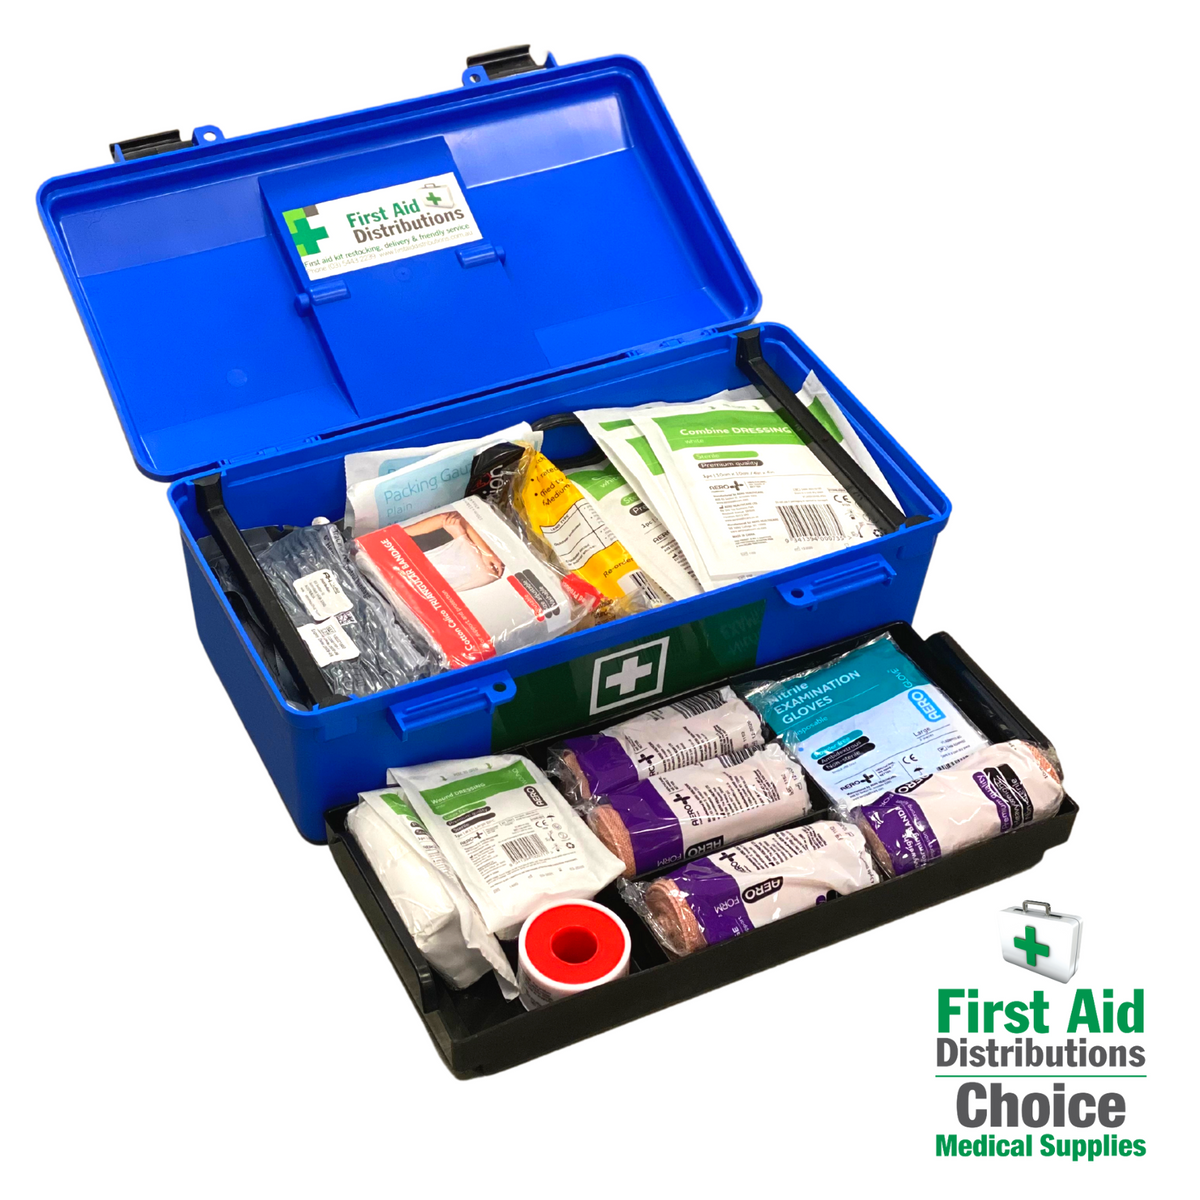 First Aid Kits - Bleeding | First Aid Distributions